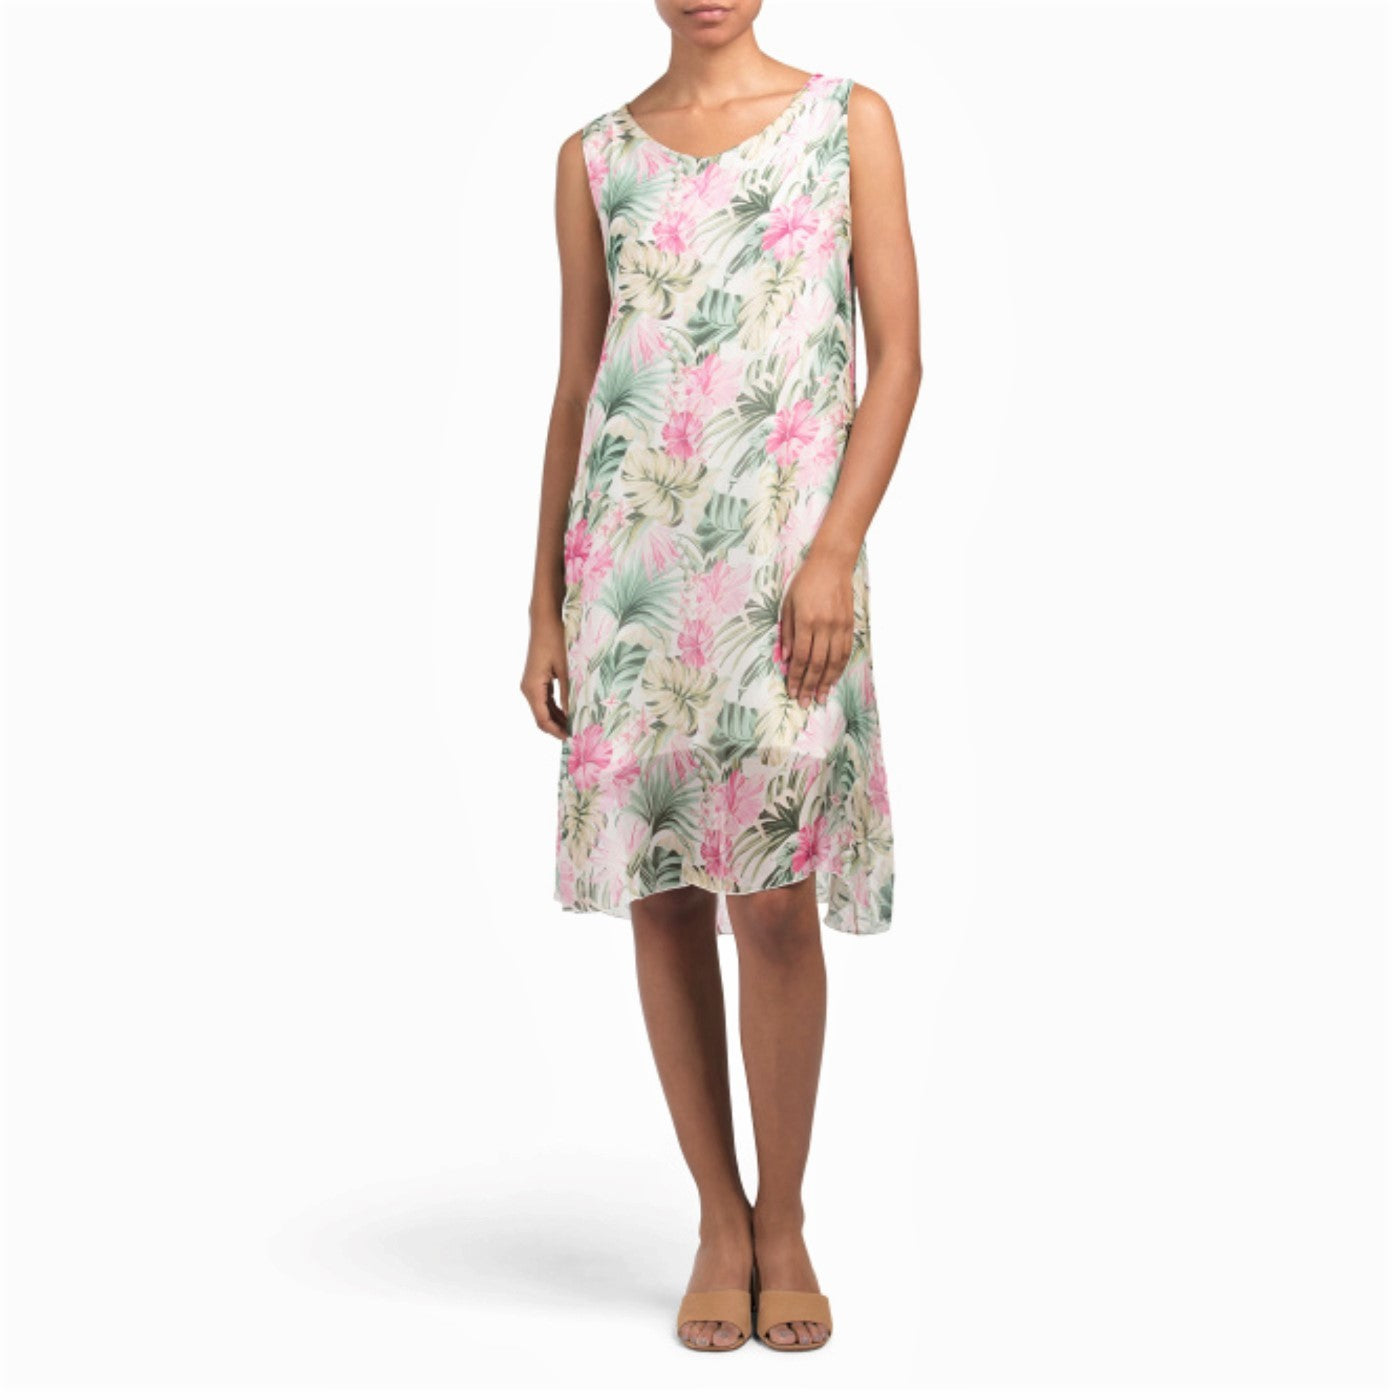 ROSEMARINE Made In Italy Hibiscus Print Silk Blend Dress